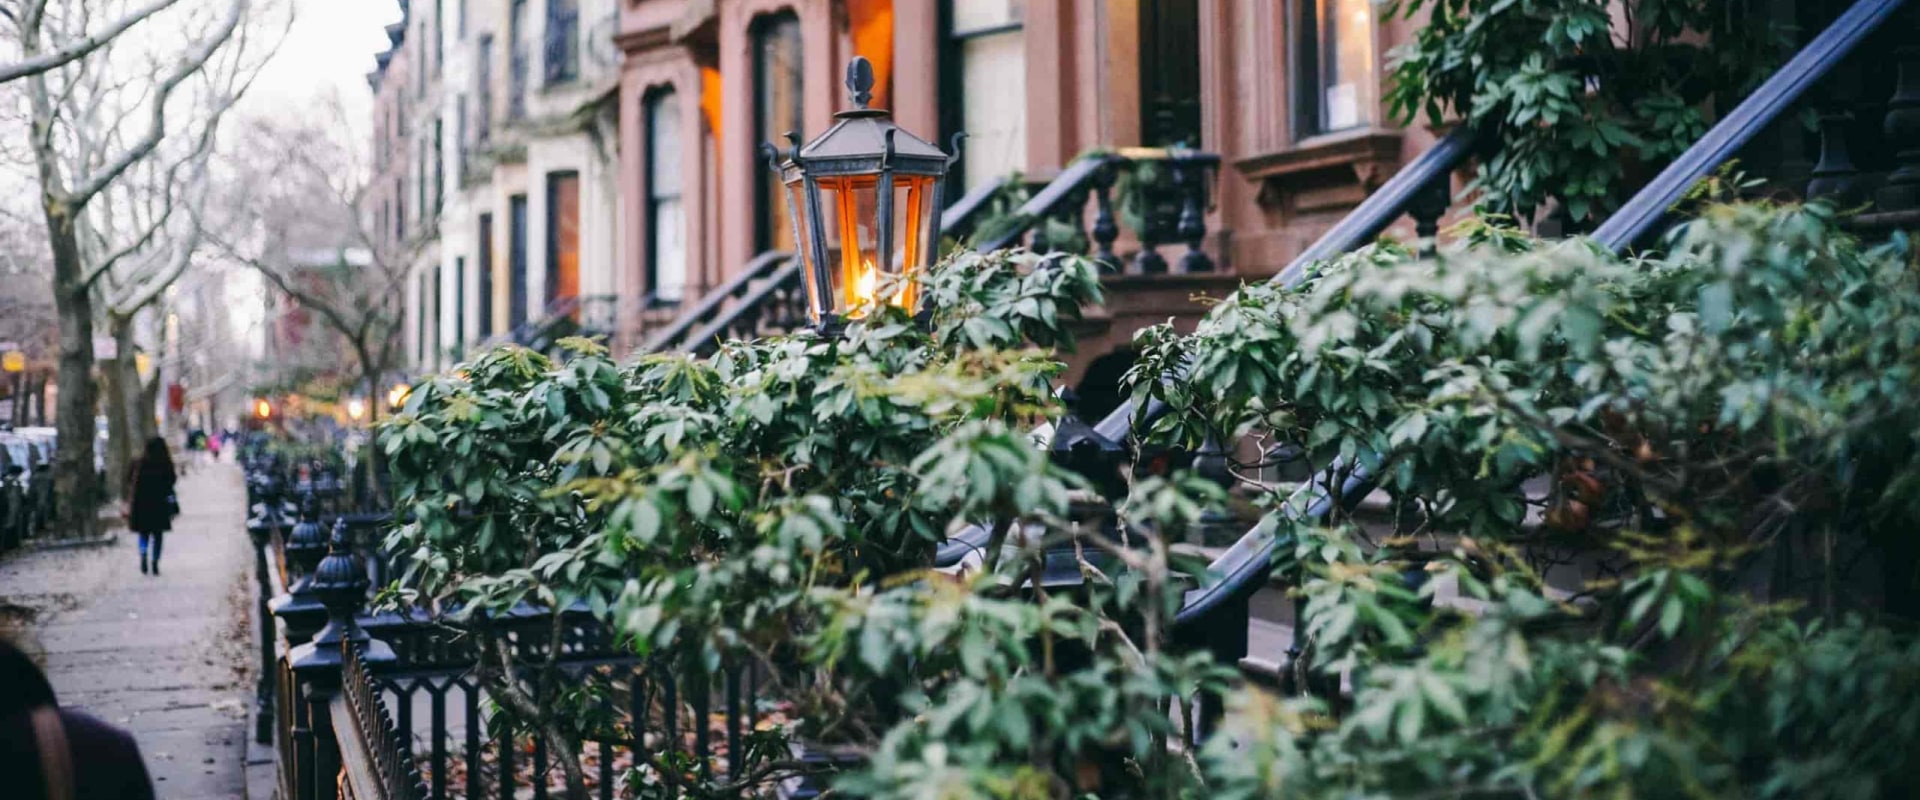 Exploring the Trendy Neighborhoods of Brooklyn, NY